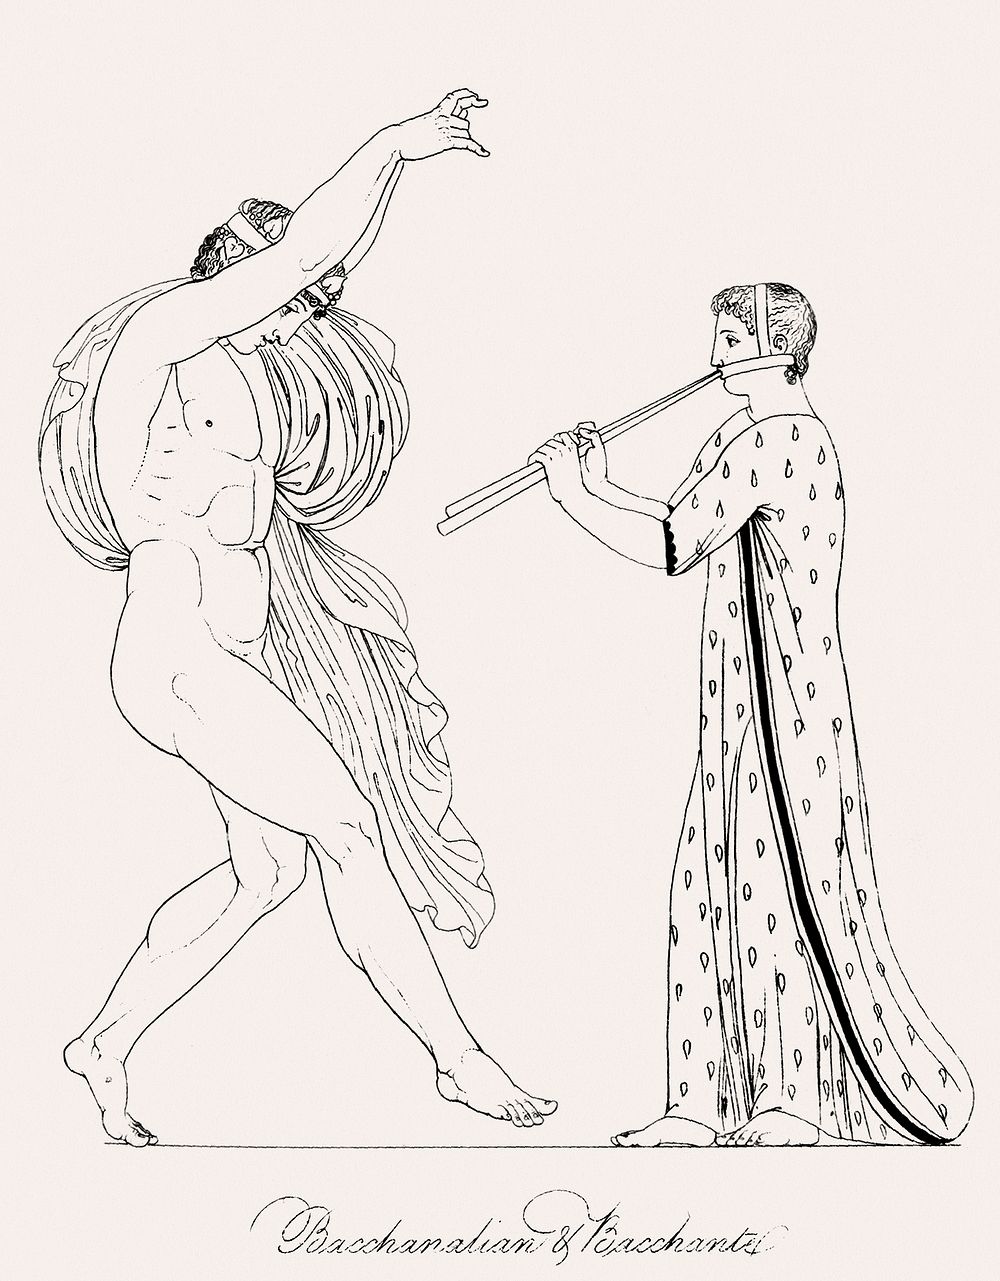 Vintage illustration of Bacchanalian & bacchante